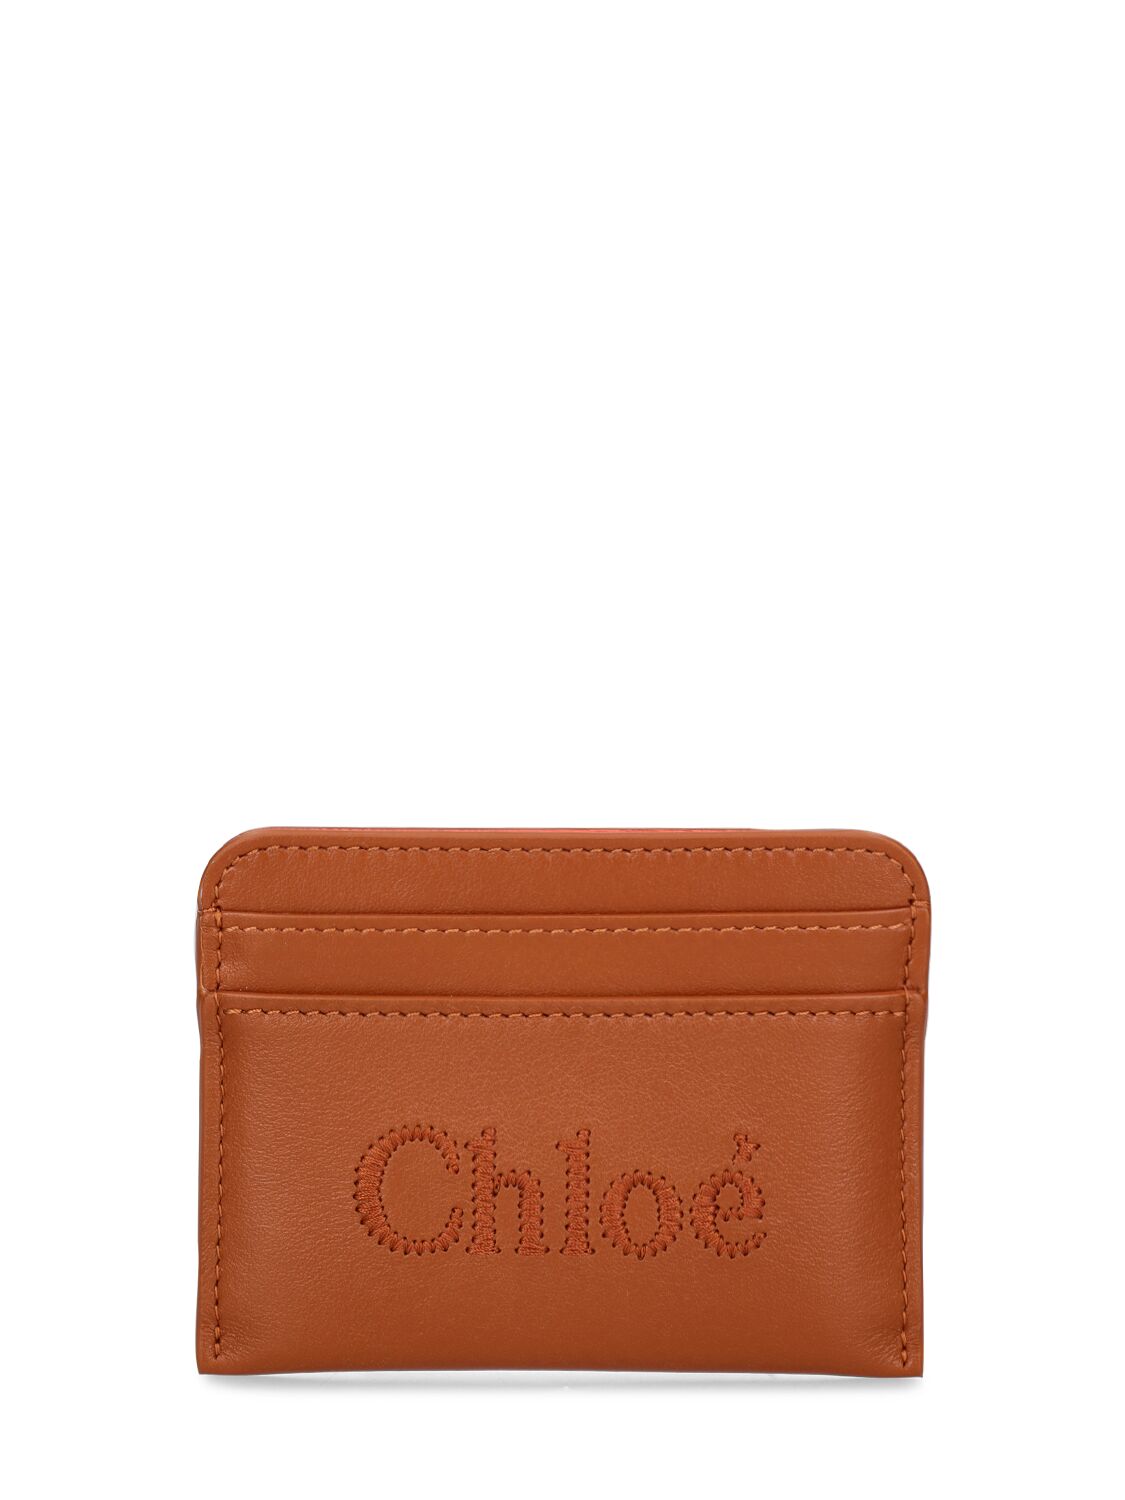 Image of Chloe Sense Leather Card Holder